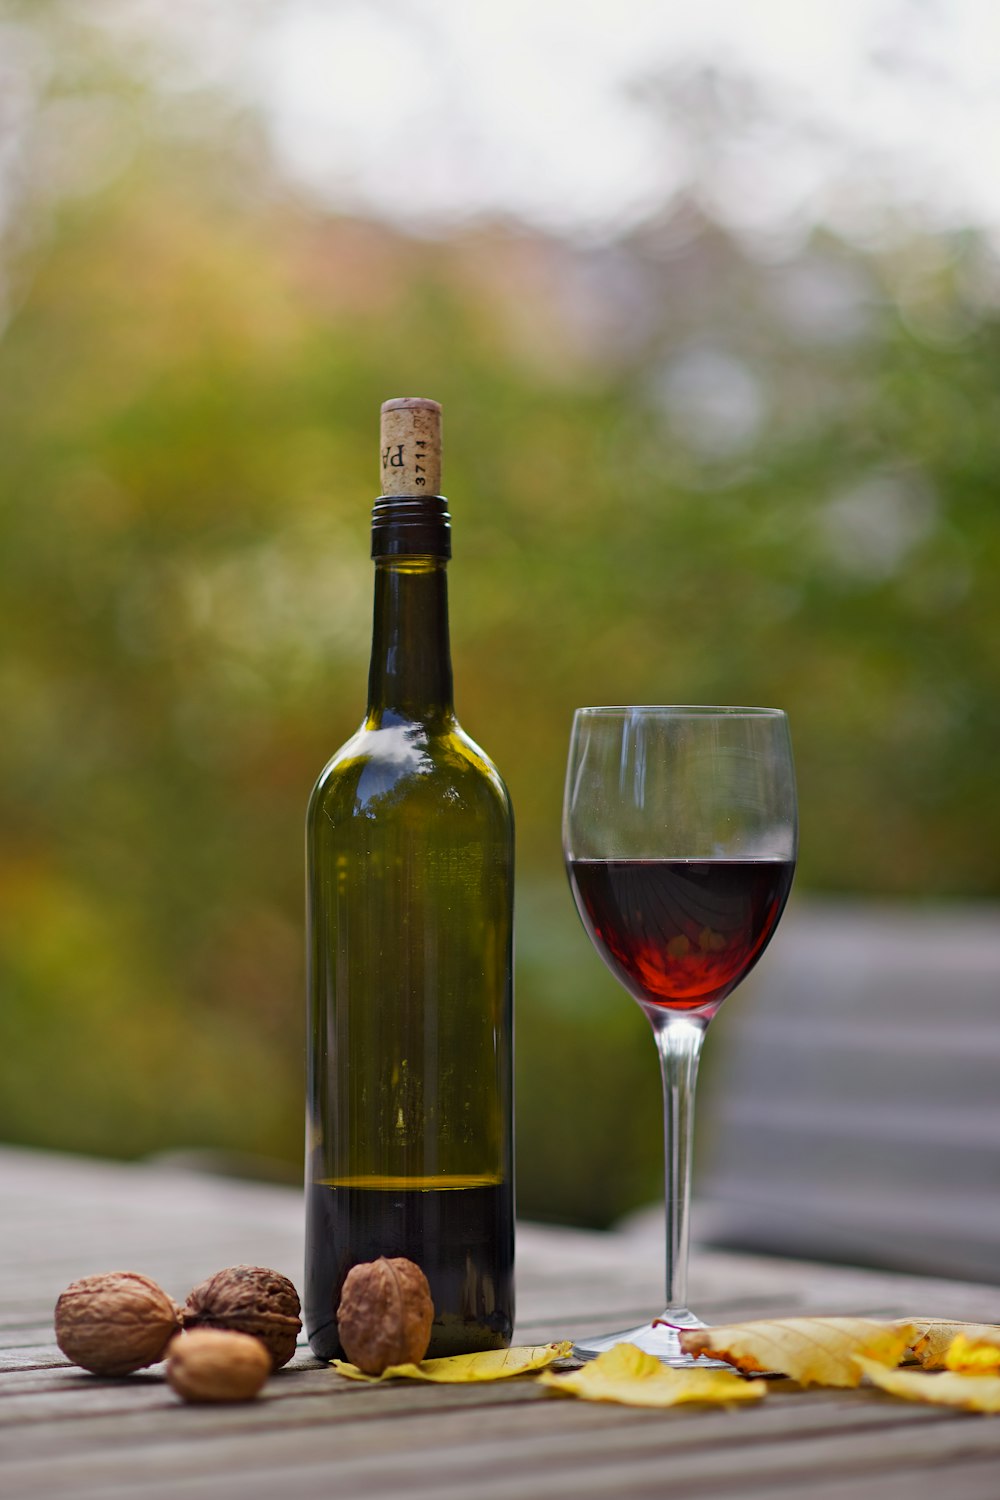 wine bottle beside wine glass on brown wooden surface